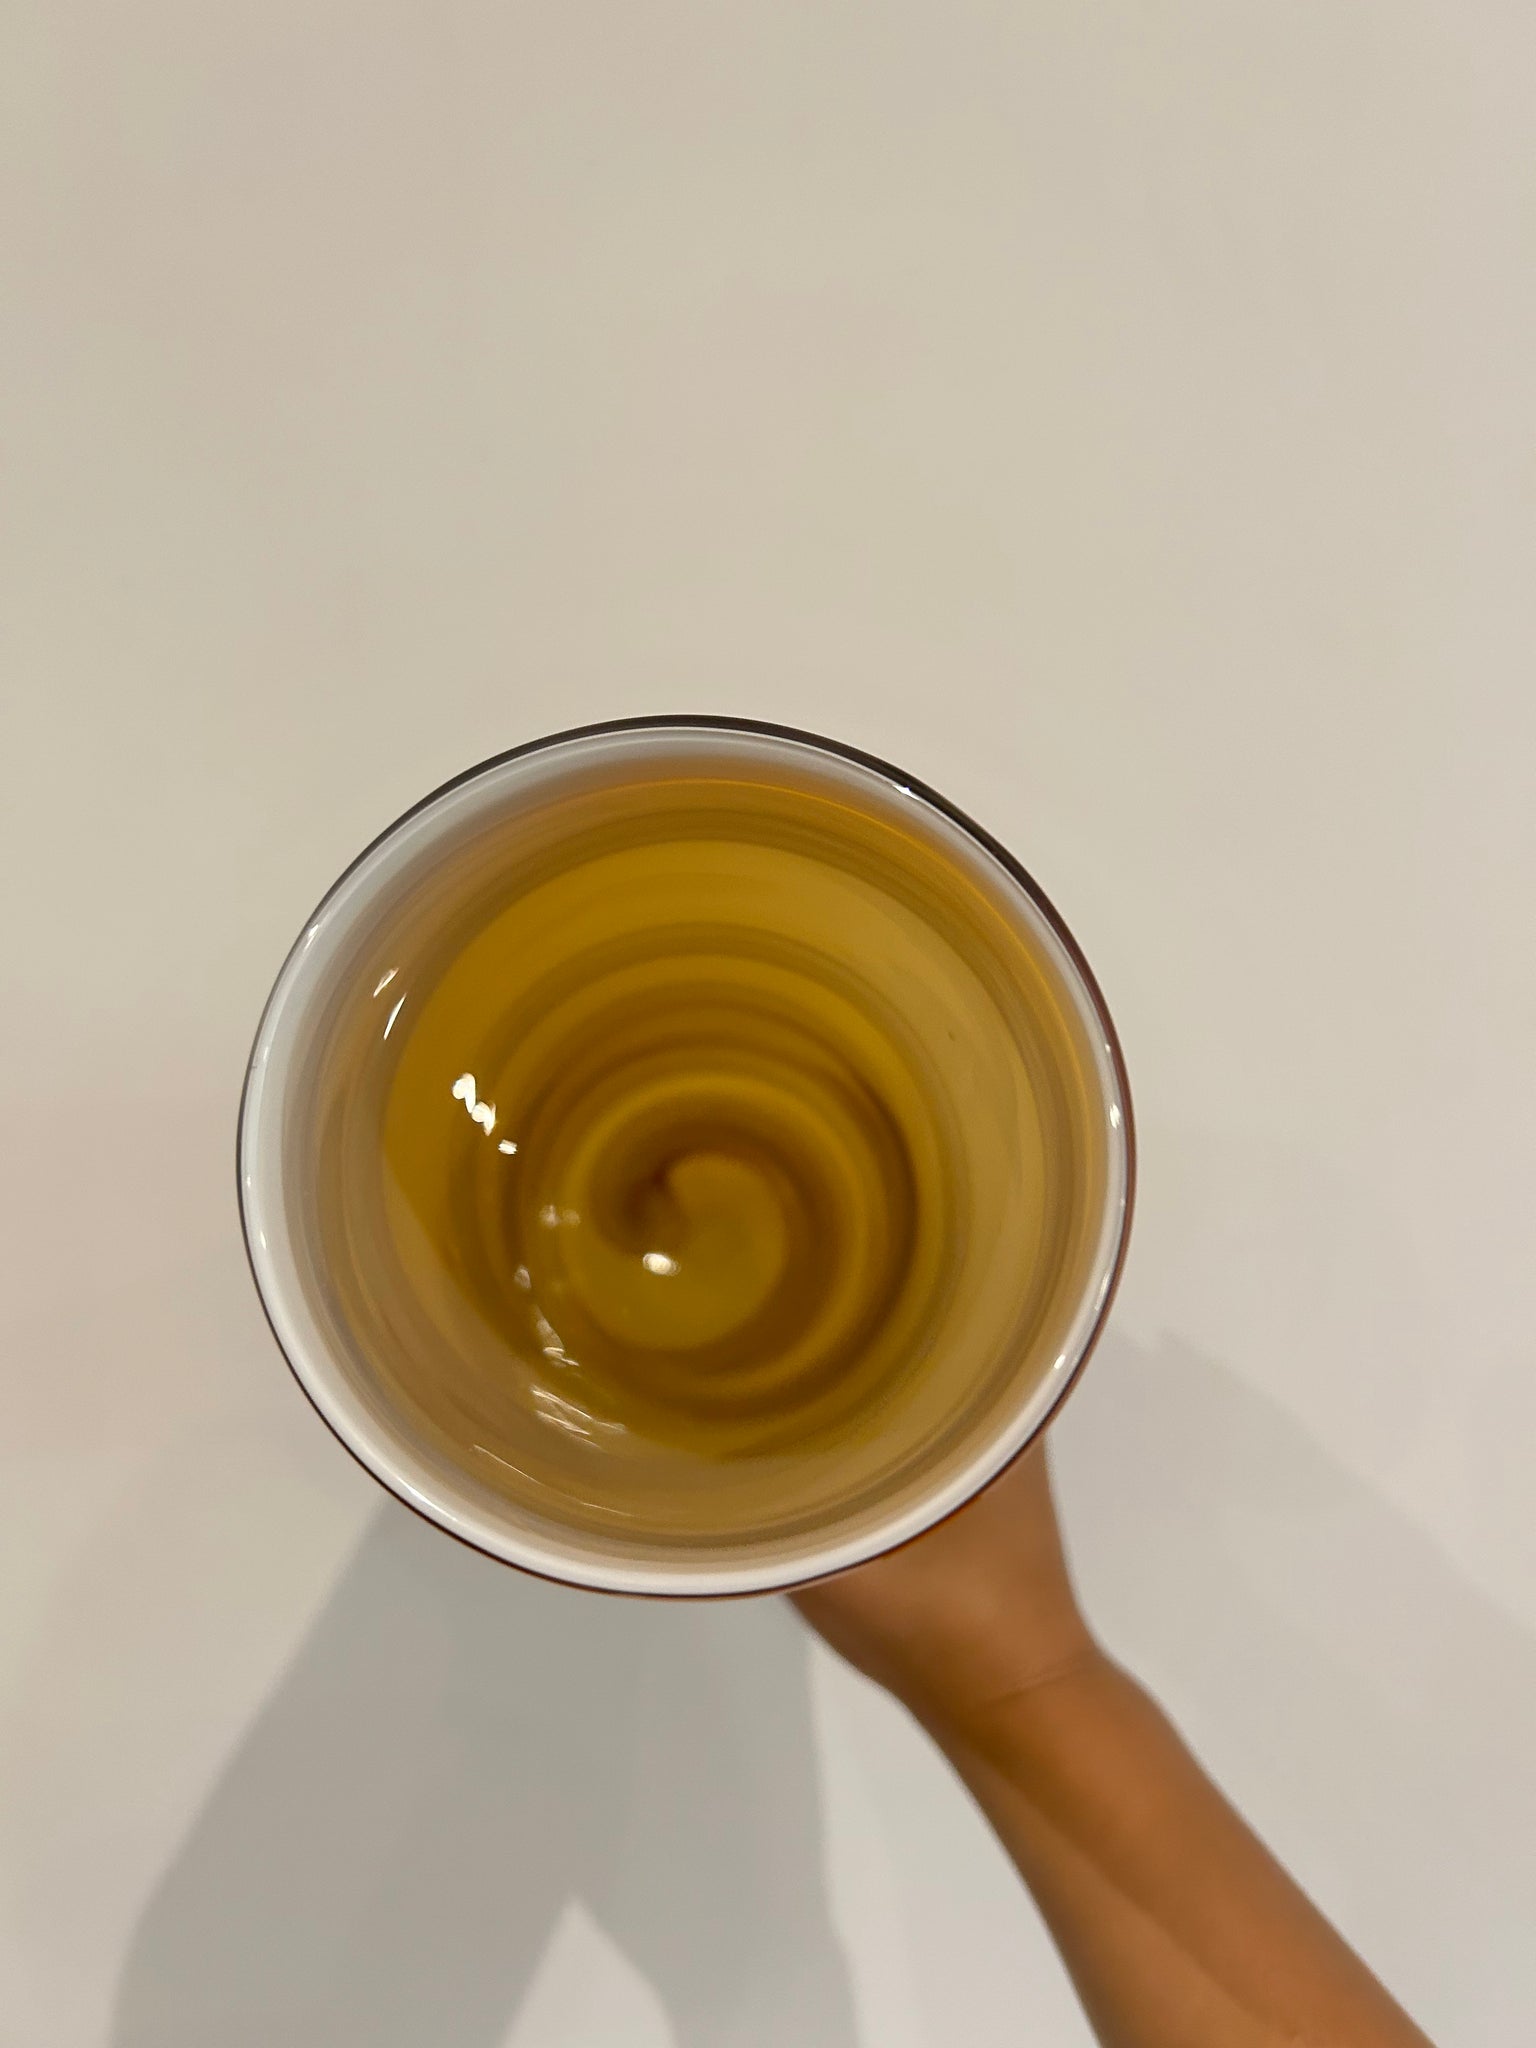 Thicc amber Murano style glass vase